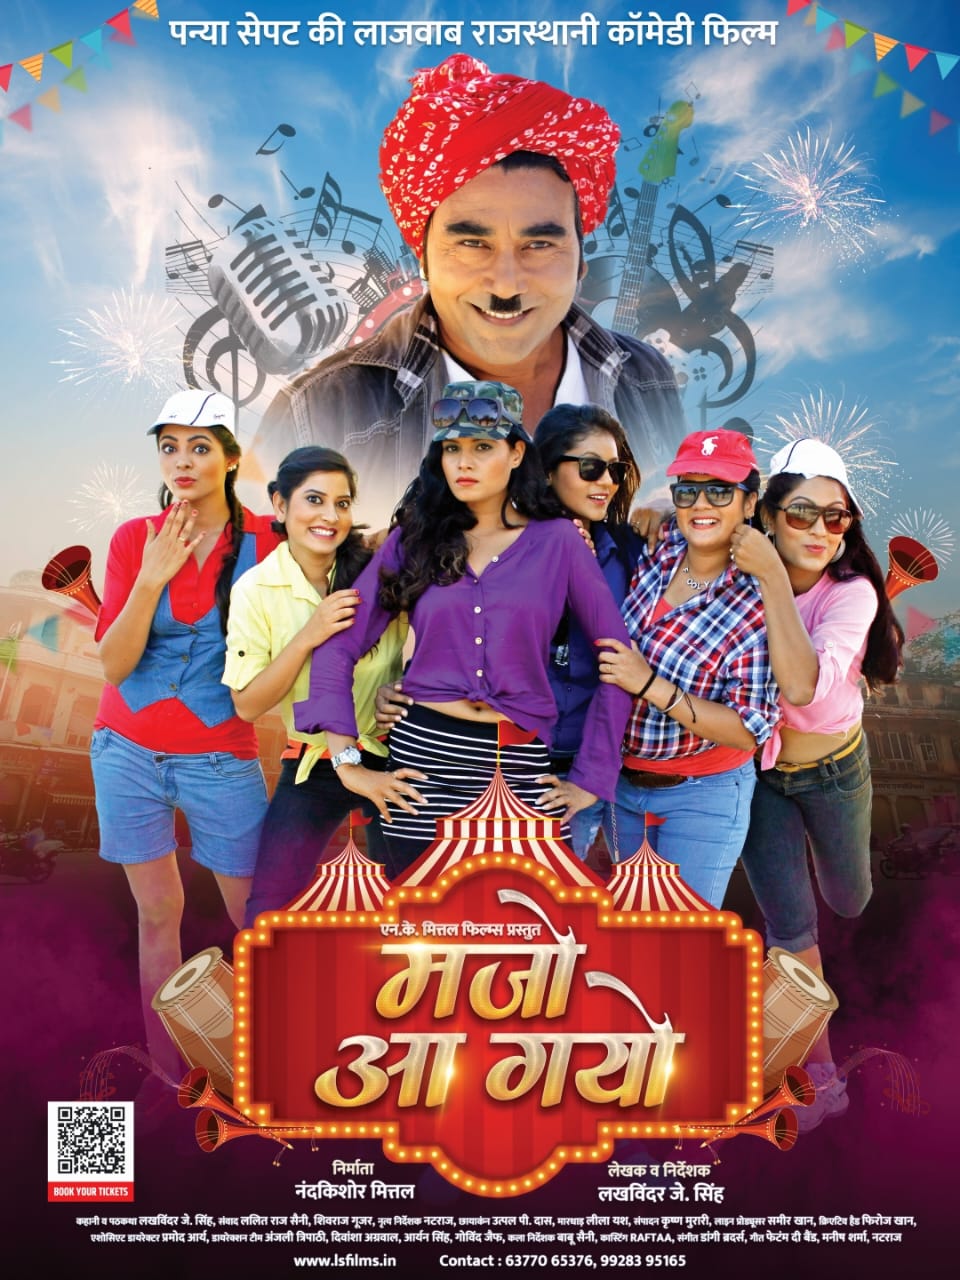 Sawai Madhopur News Rajasthani film Majo Ya Gayo will be release on October 28